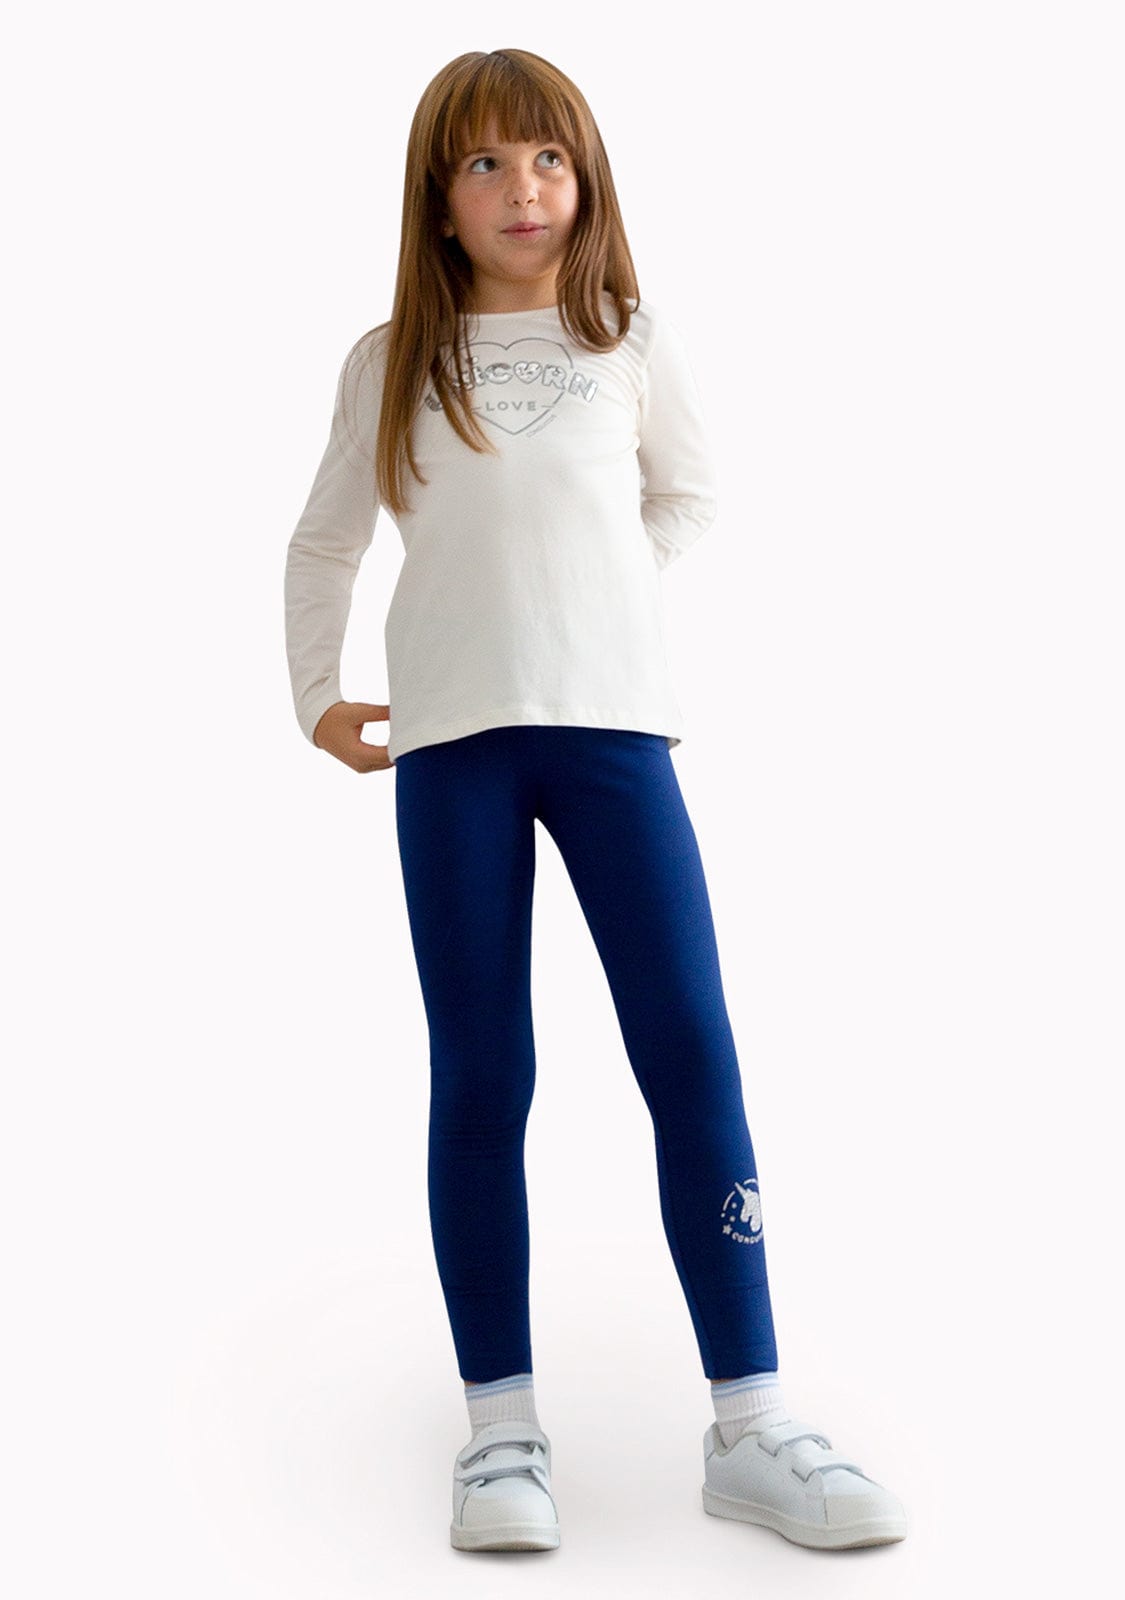 CONGUITOS TEXTIL Clothing Girl's Navy Cotton Leggings